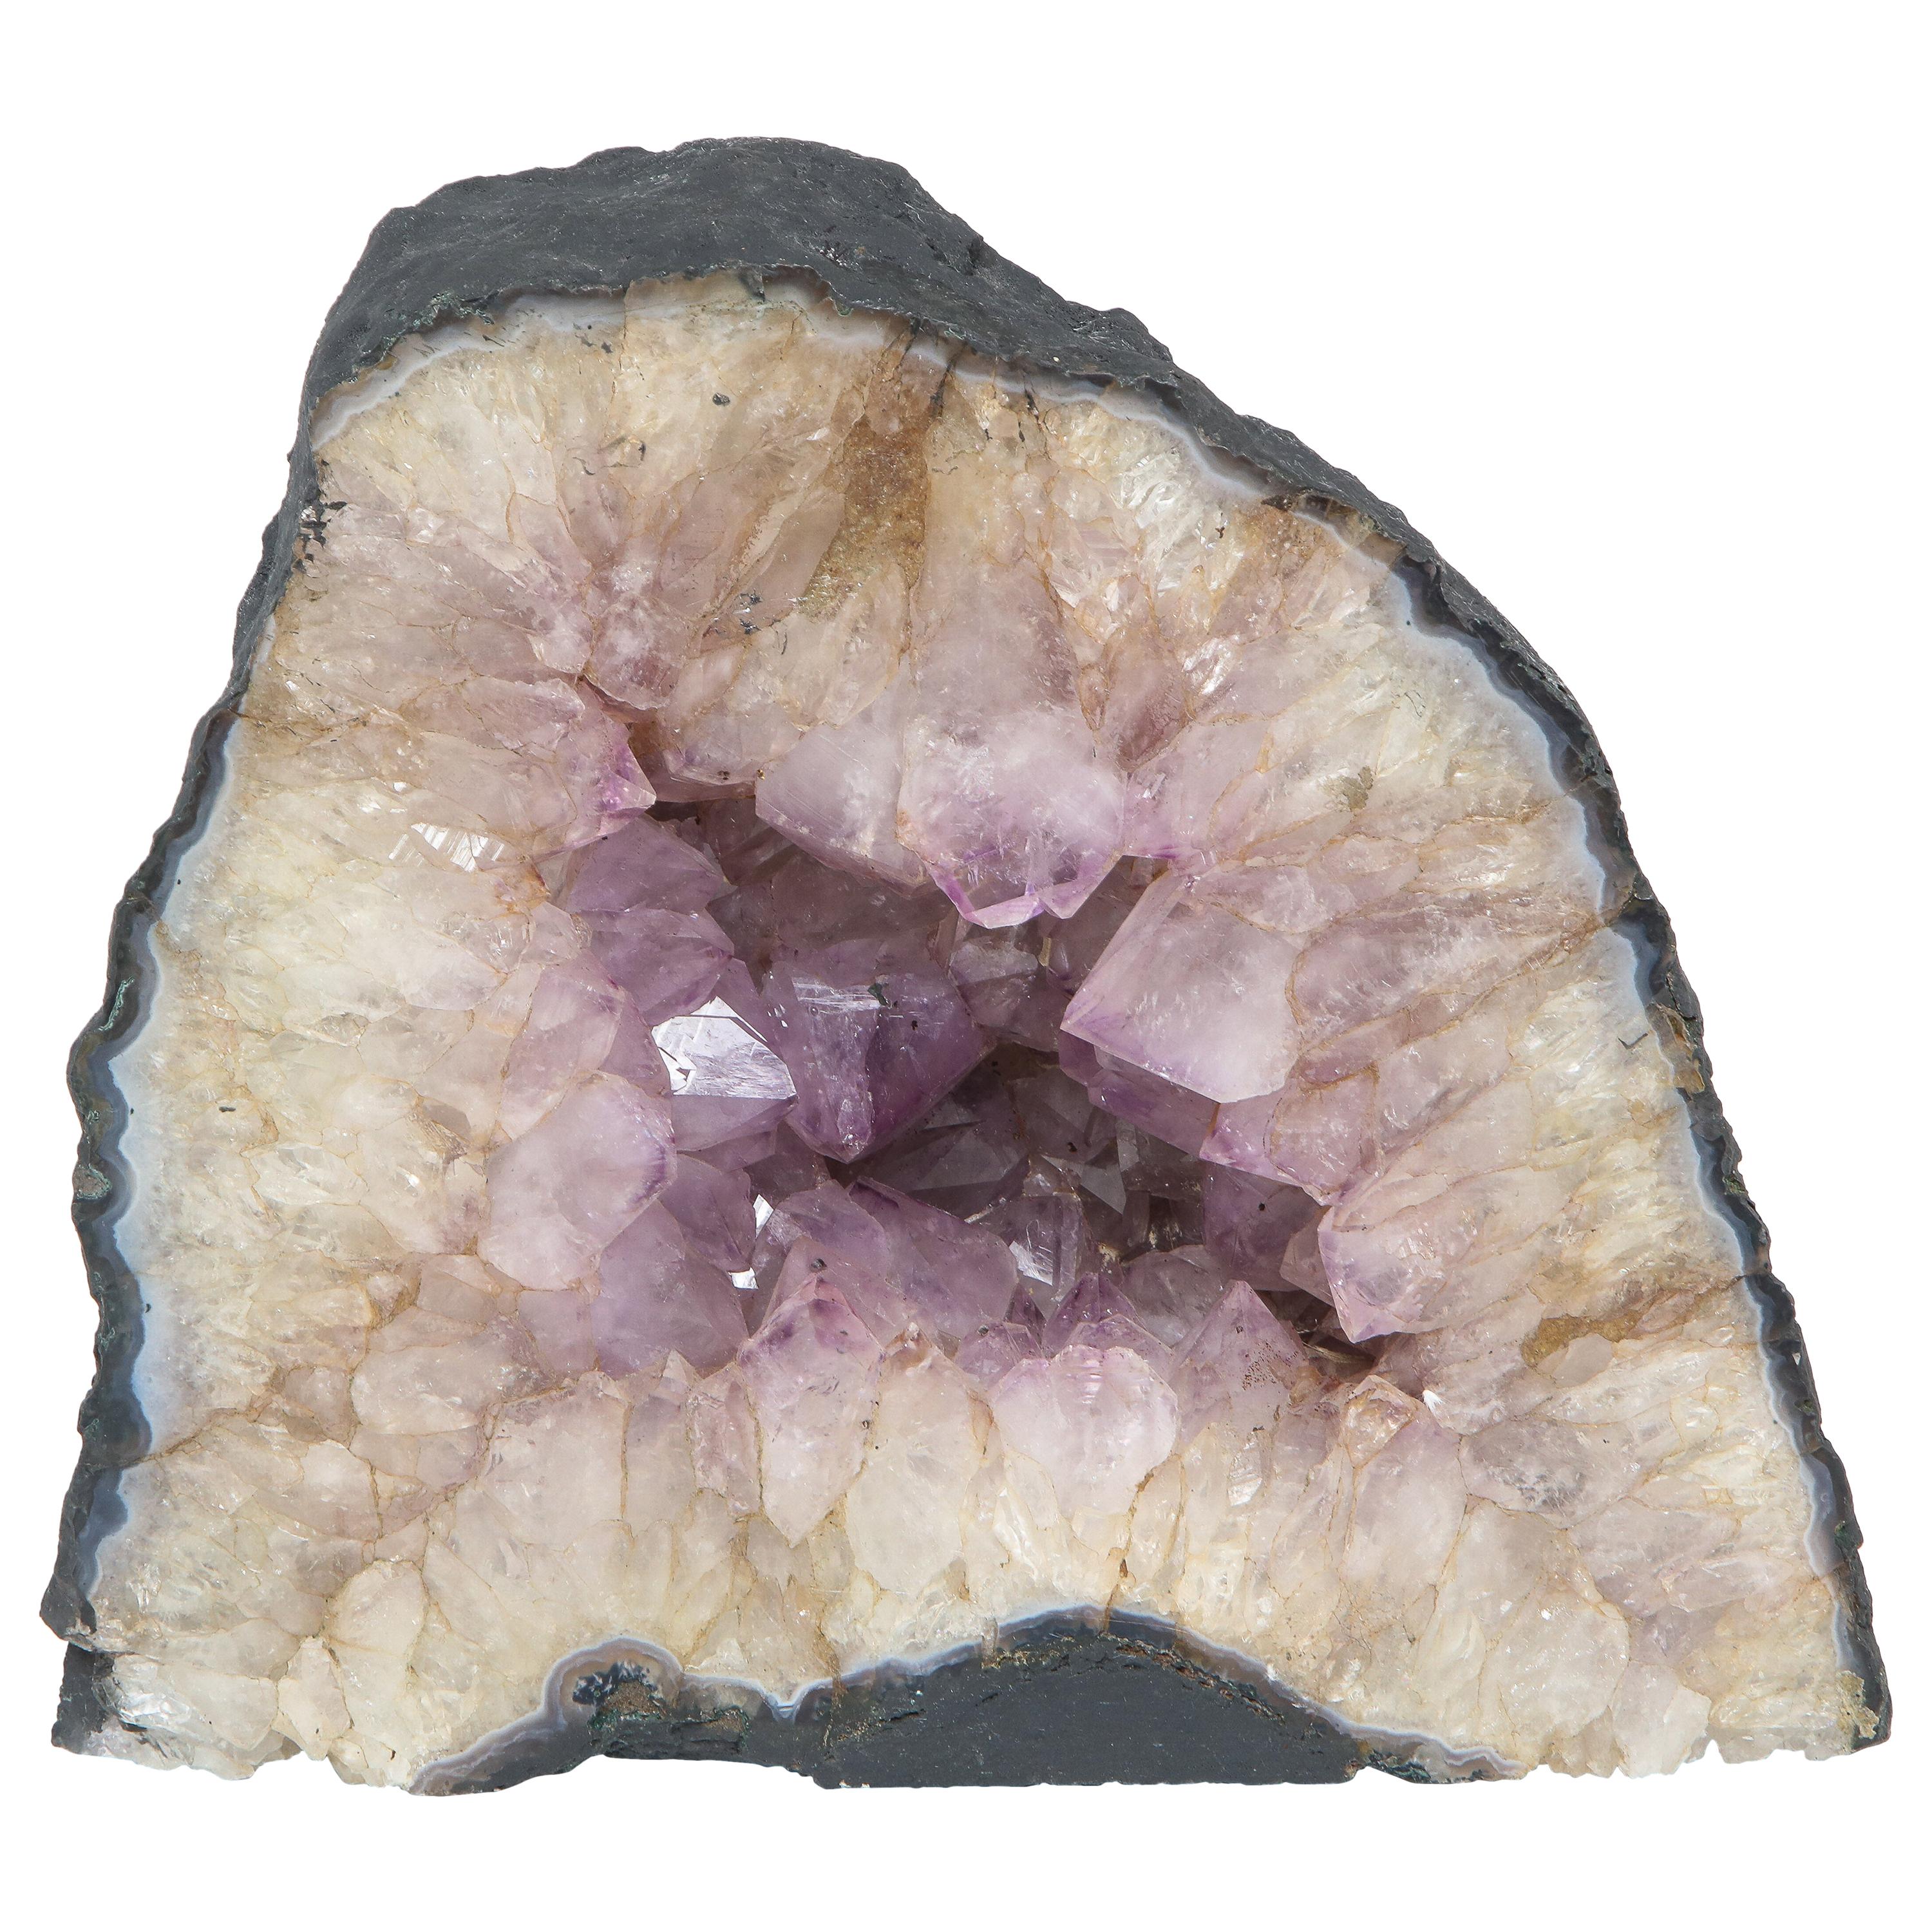 Massiver Amethyst, Quarzkristall-Exemplar